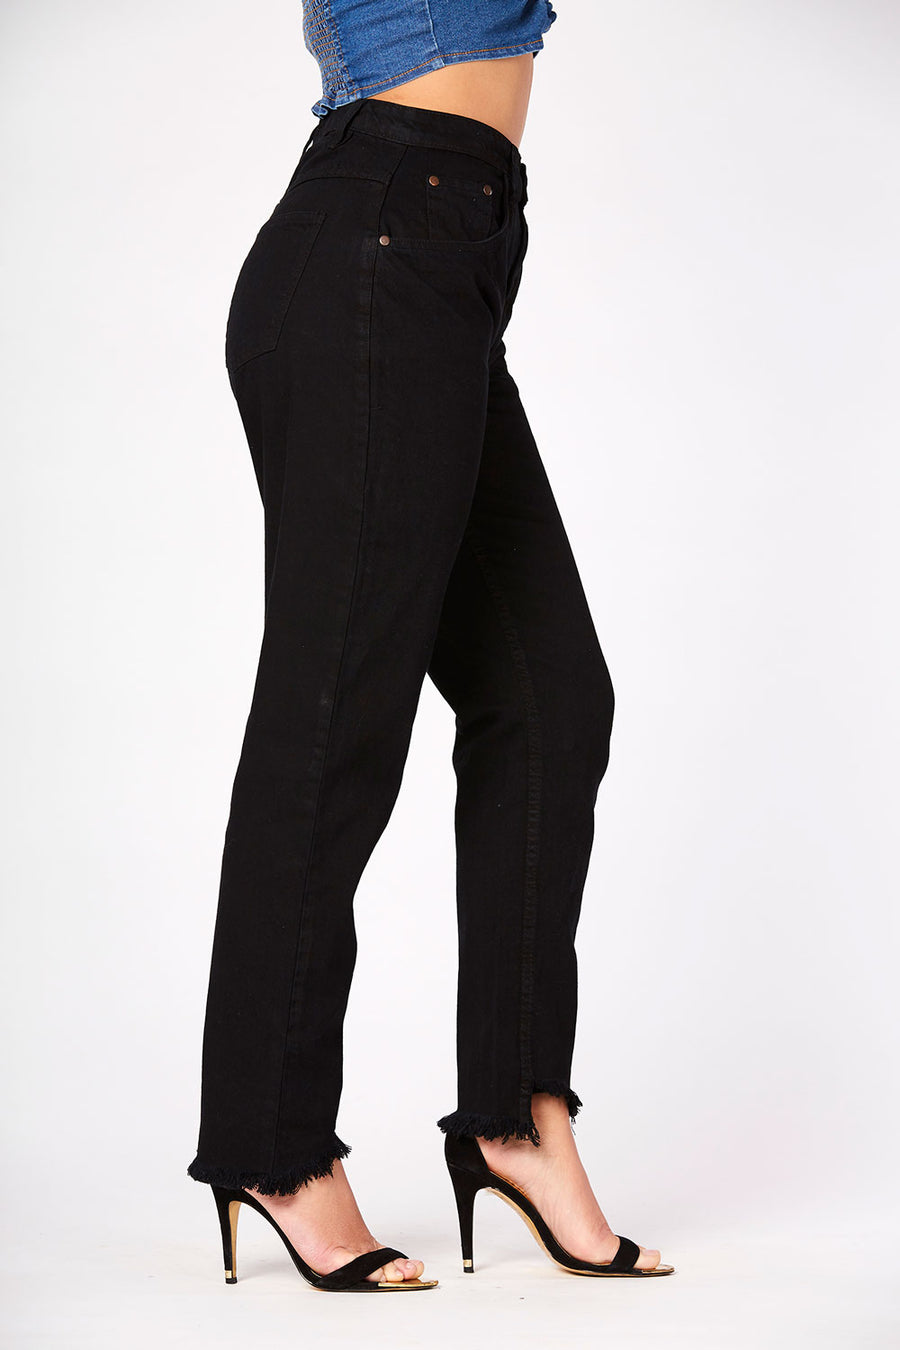 Women's Black Frayed Hem Jeans